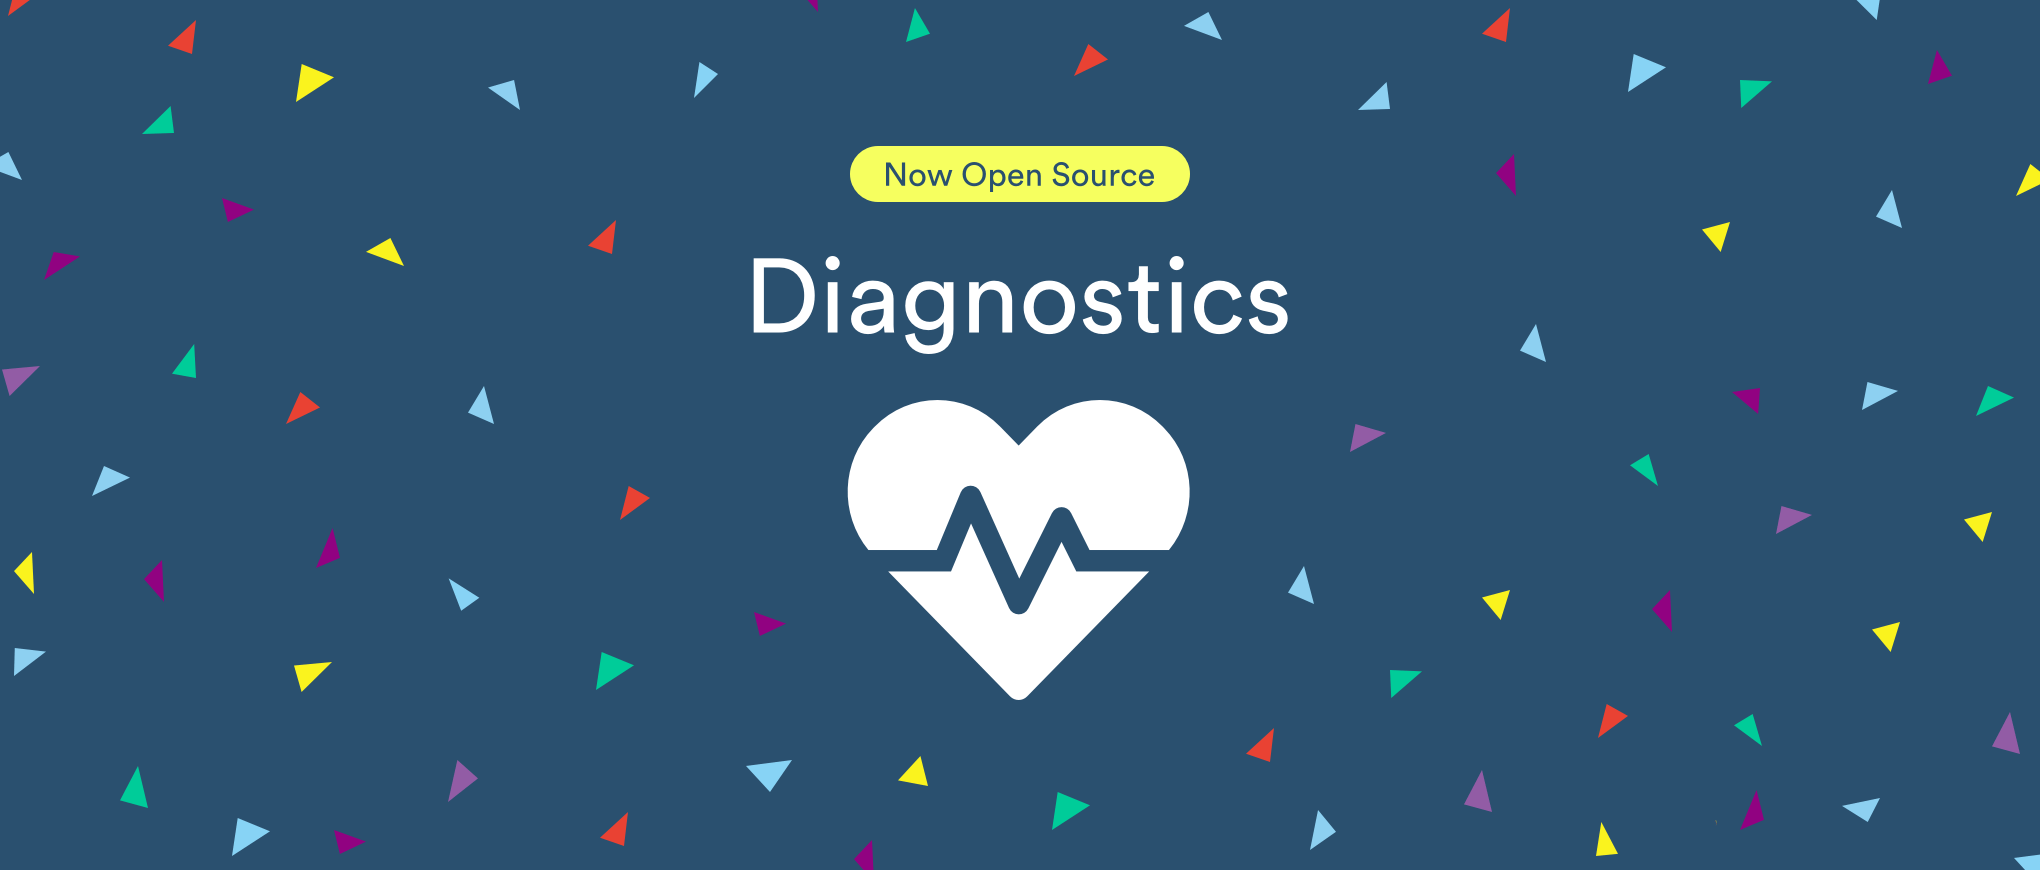 Device diagnostics are now open-source!